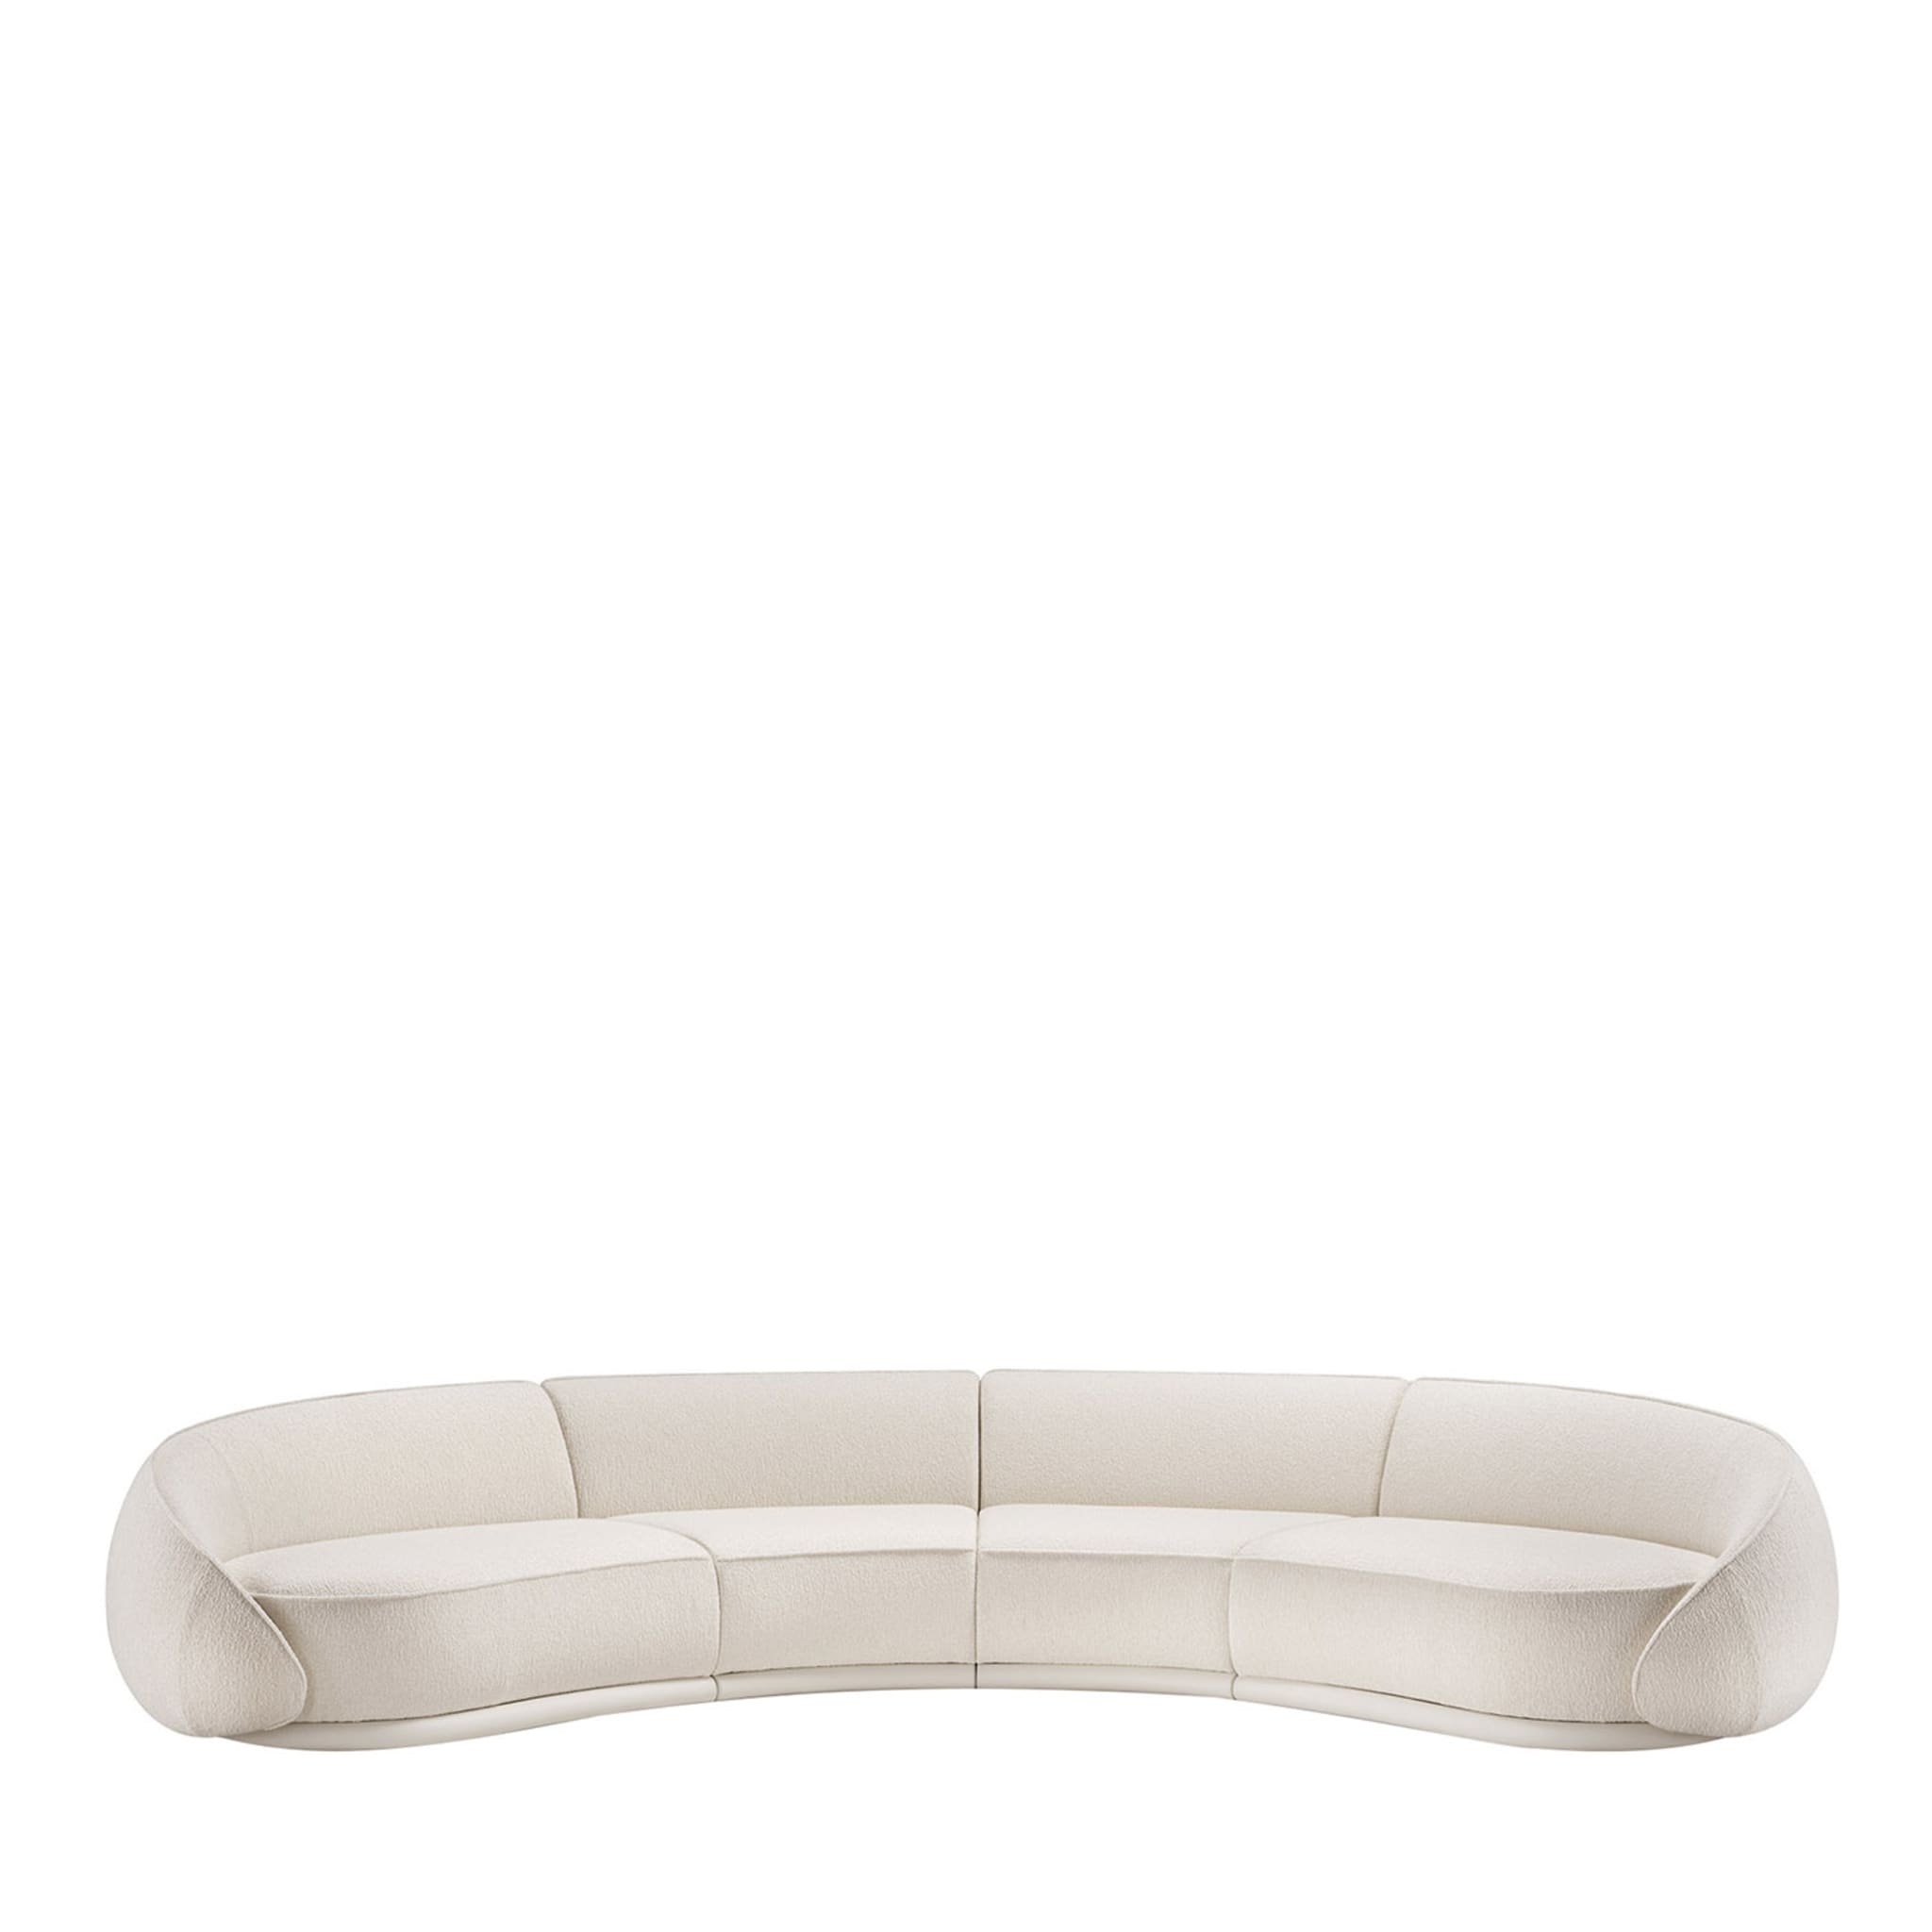 Abbracci 4-Module White Sofa by Lorenza Bozzoli - Main view